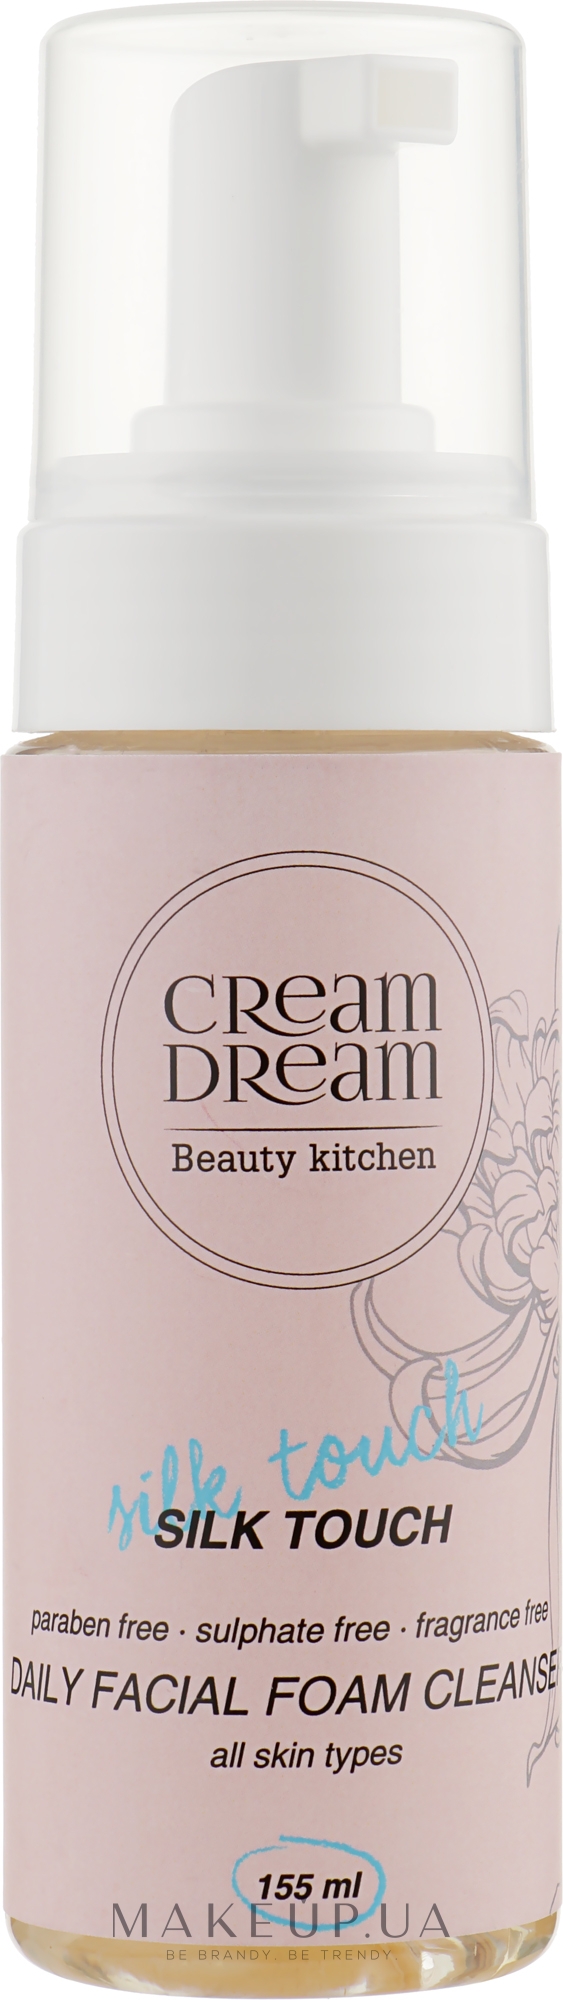 Мягкая пена-мусс для умывания без сульфатов и ароматизаторов - Cream Dream beauty kitchen Cream Dream Daily Facial Foam Cleansing — фото 155ml